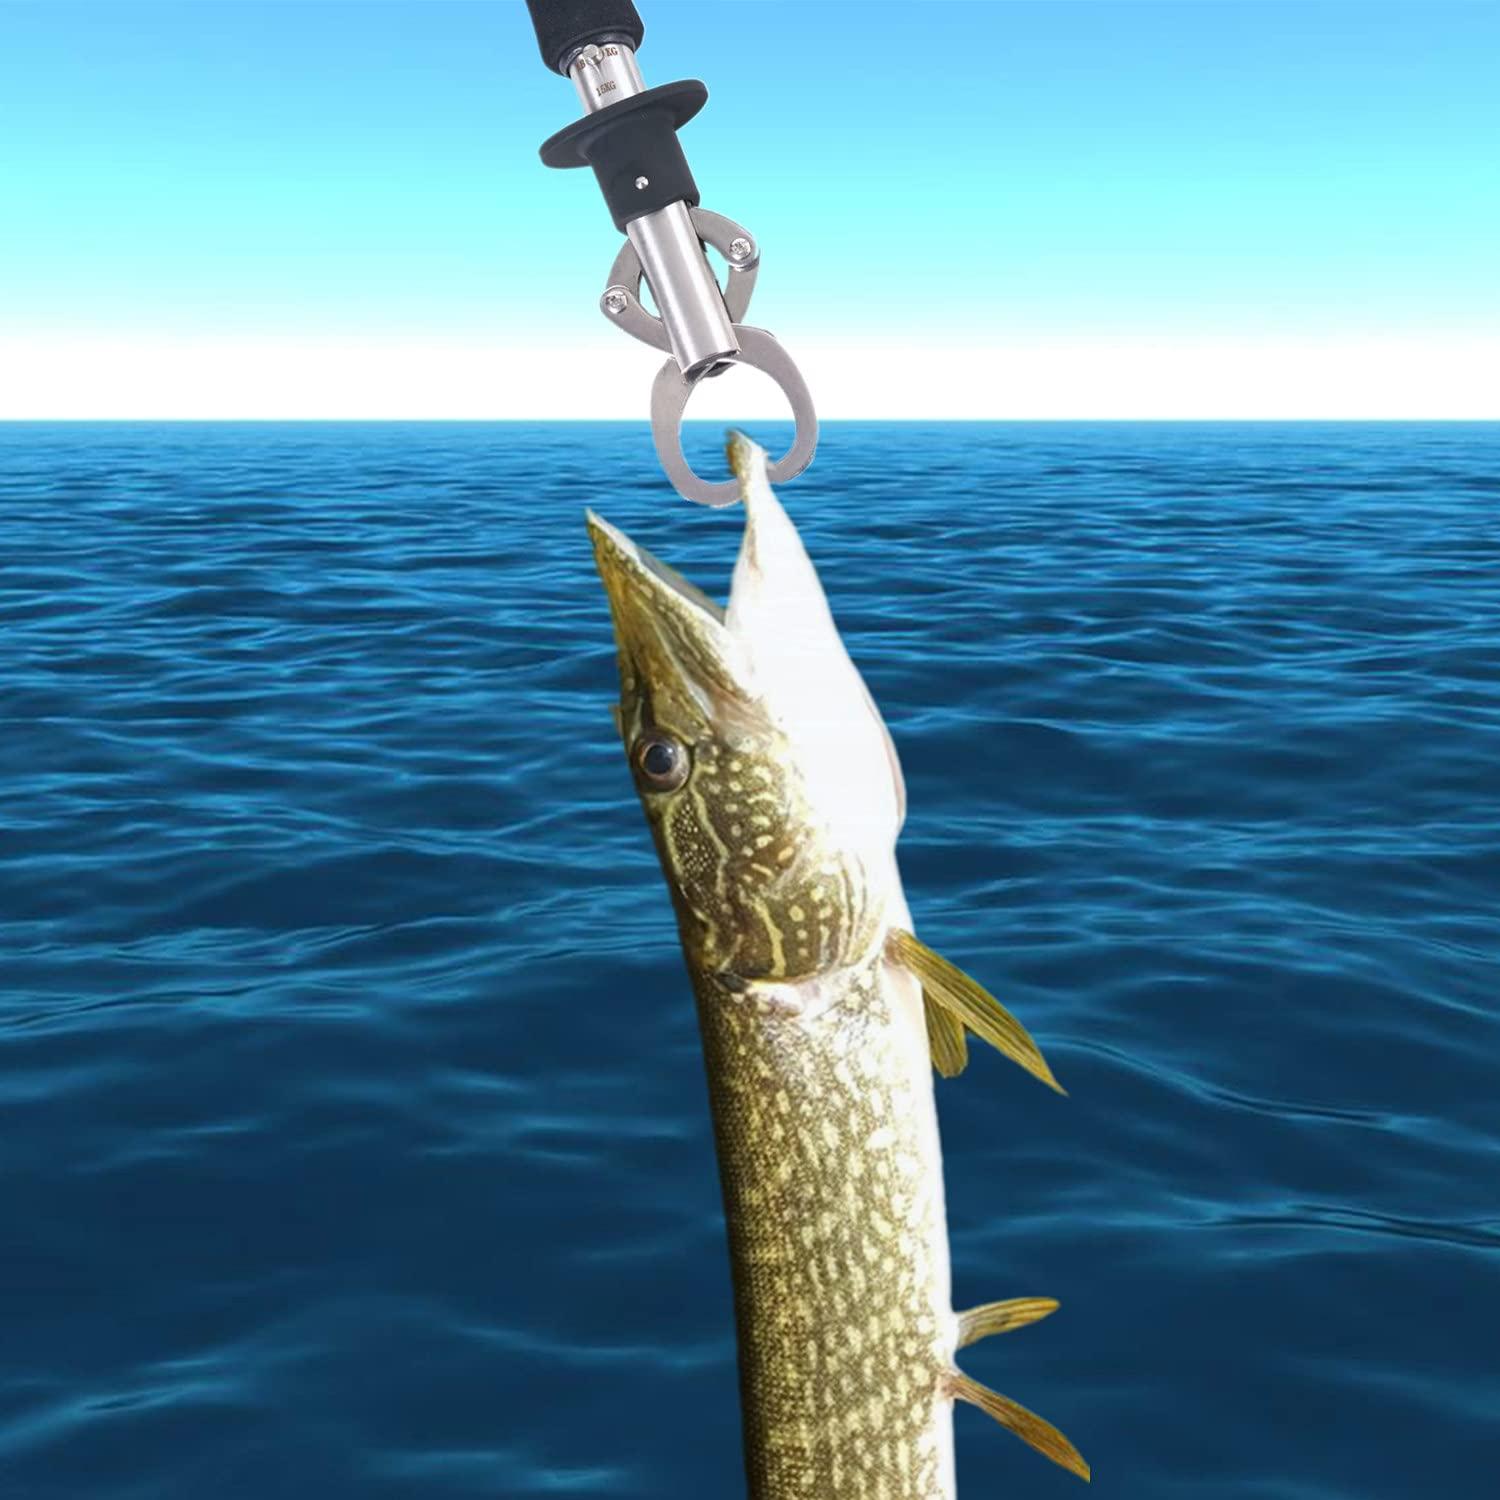 Grabber Fishing Gripper, Tools Fishing Fish Grip